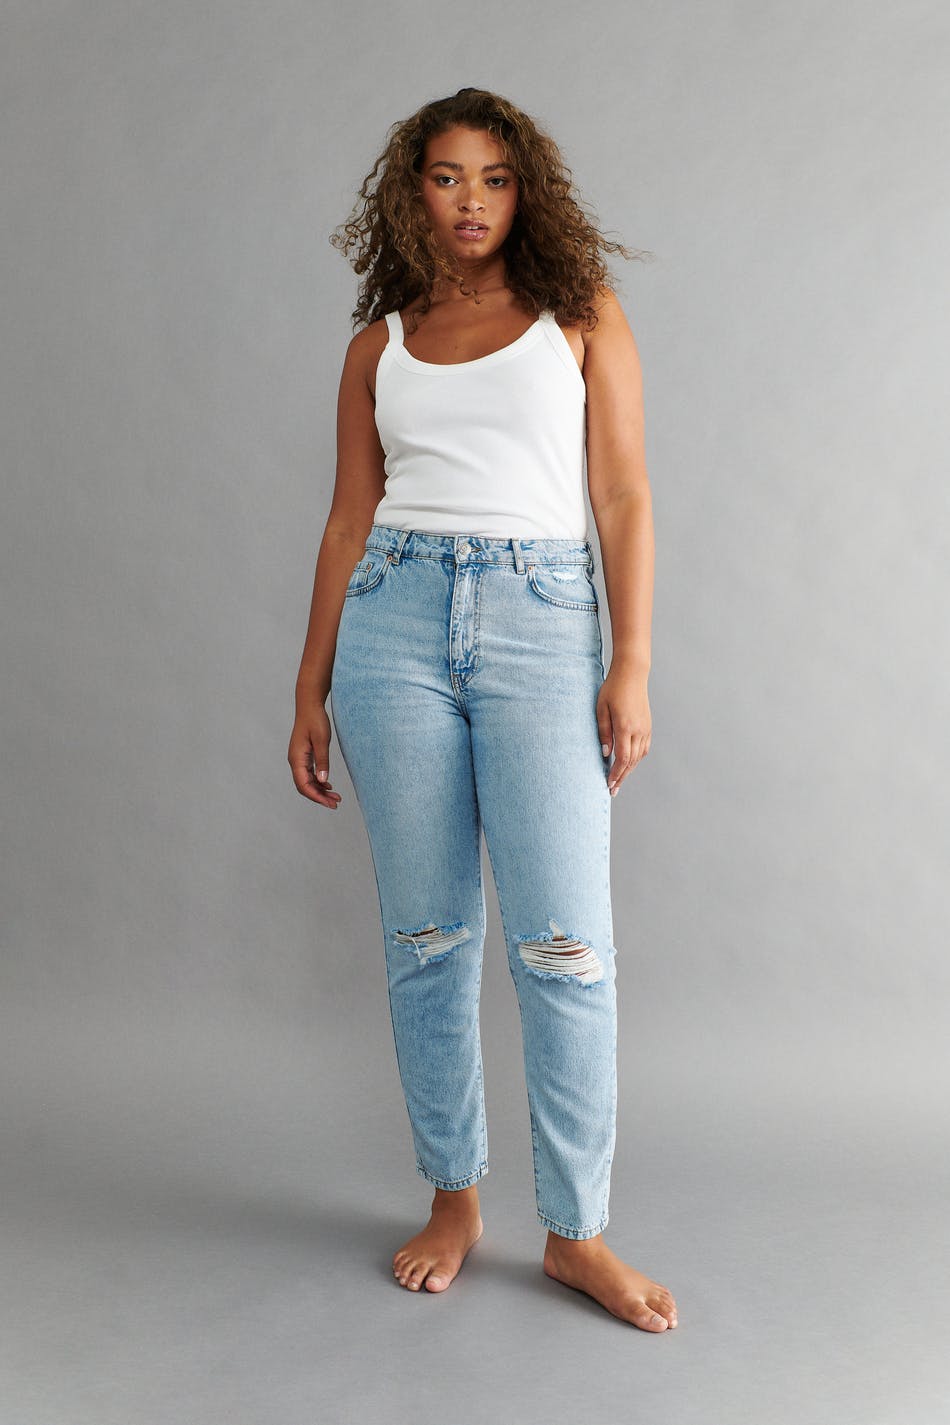 Dagny jeans - Gina Tricot